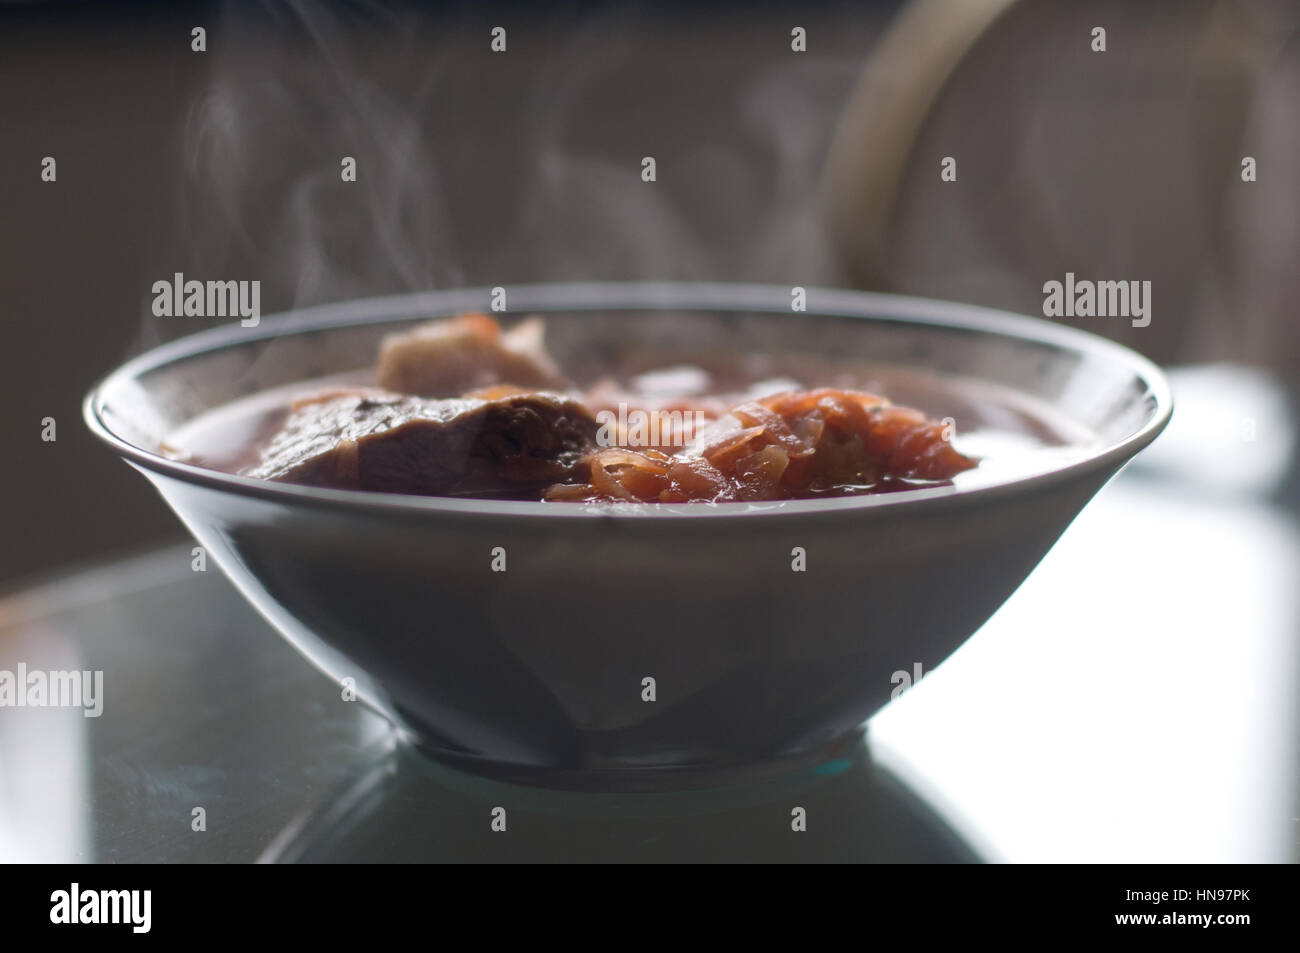 Borscht ukrainian national cuisine on the table in deep plate with steam Stock Photo